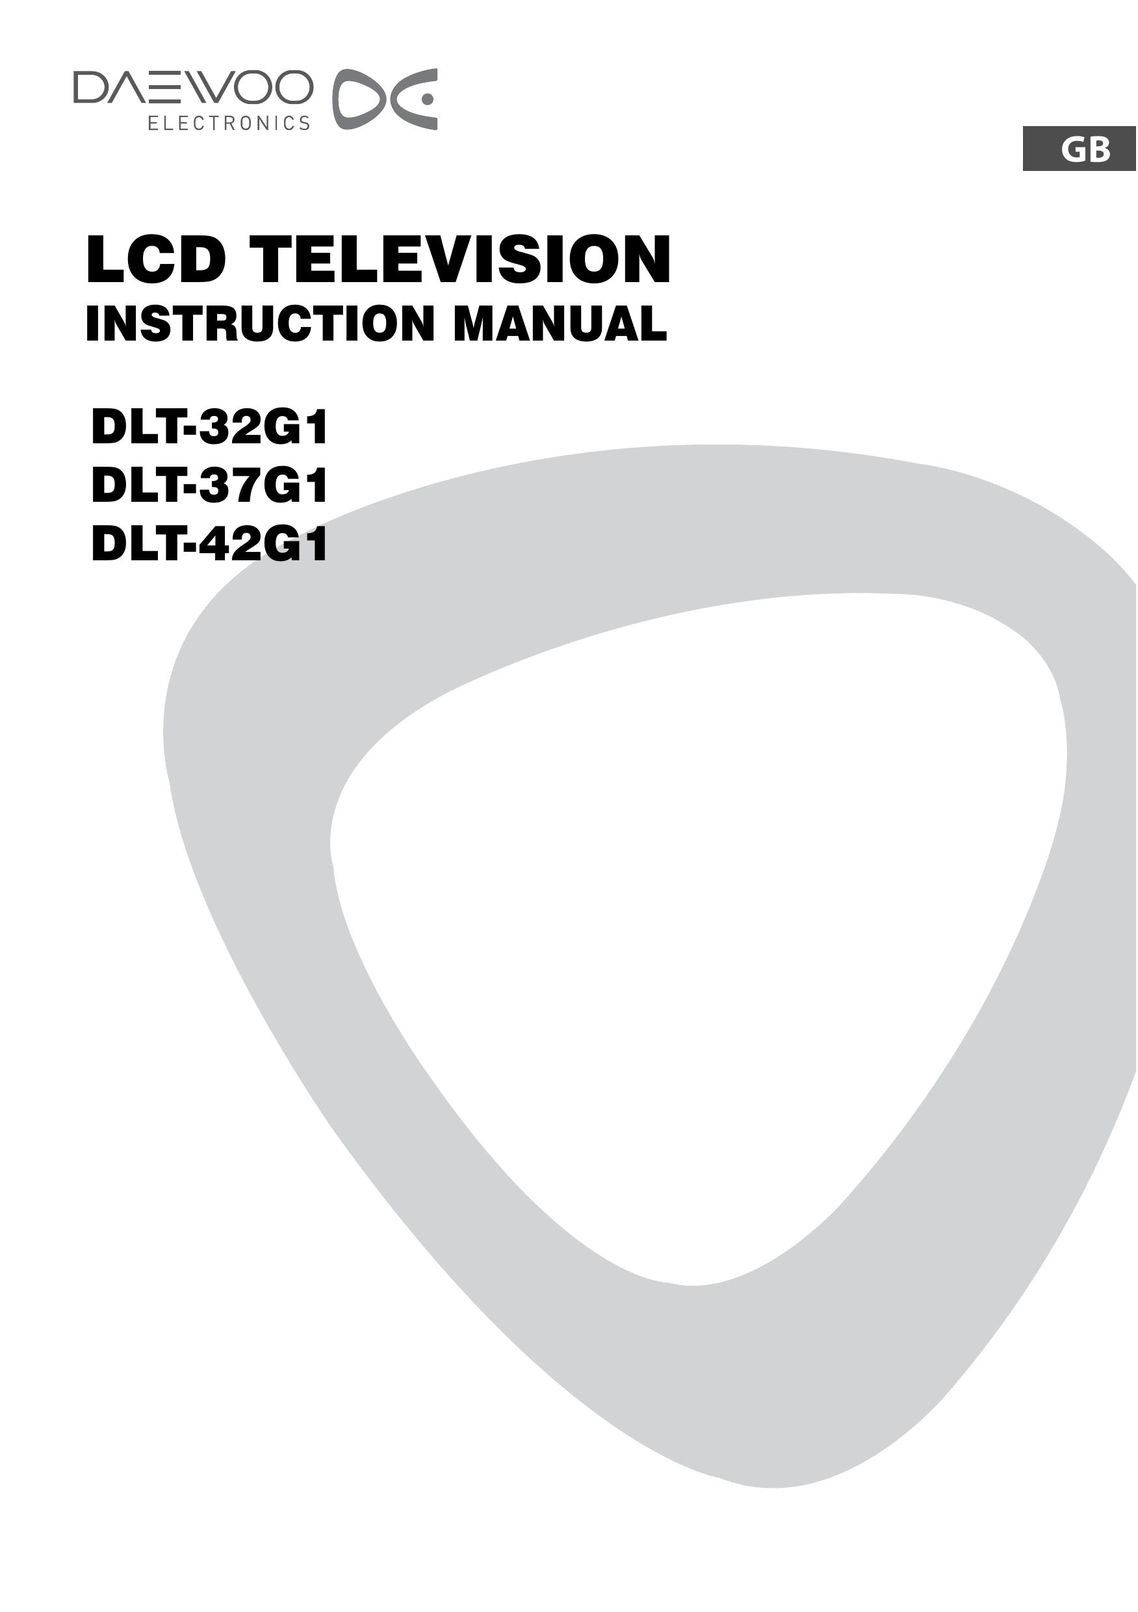 Daewoo DLT-32G1 Flat Panel Television User Manual